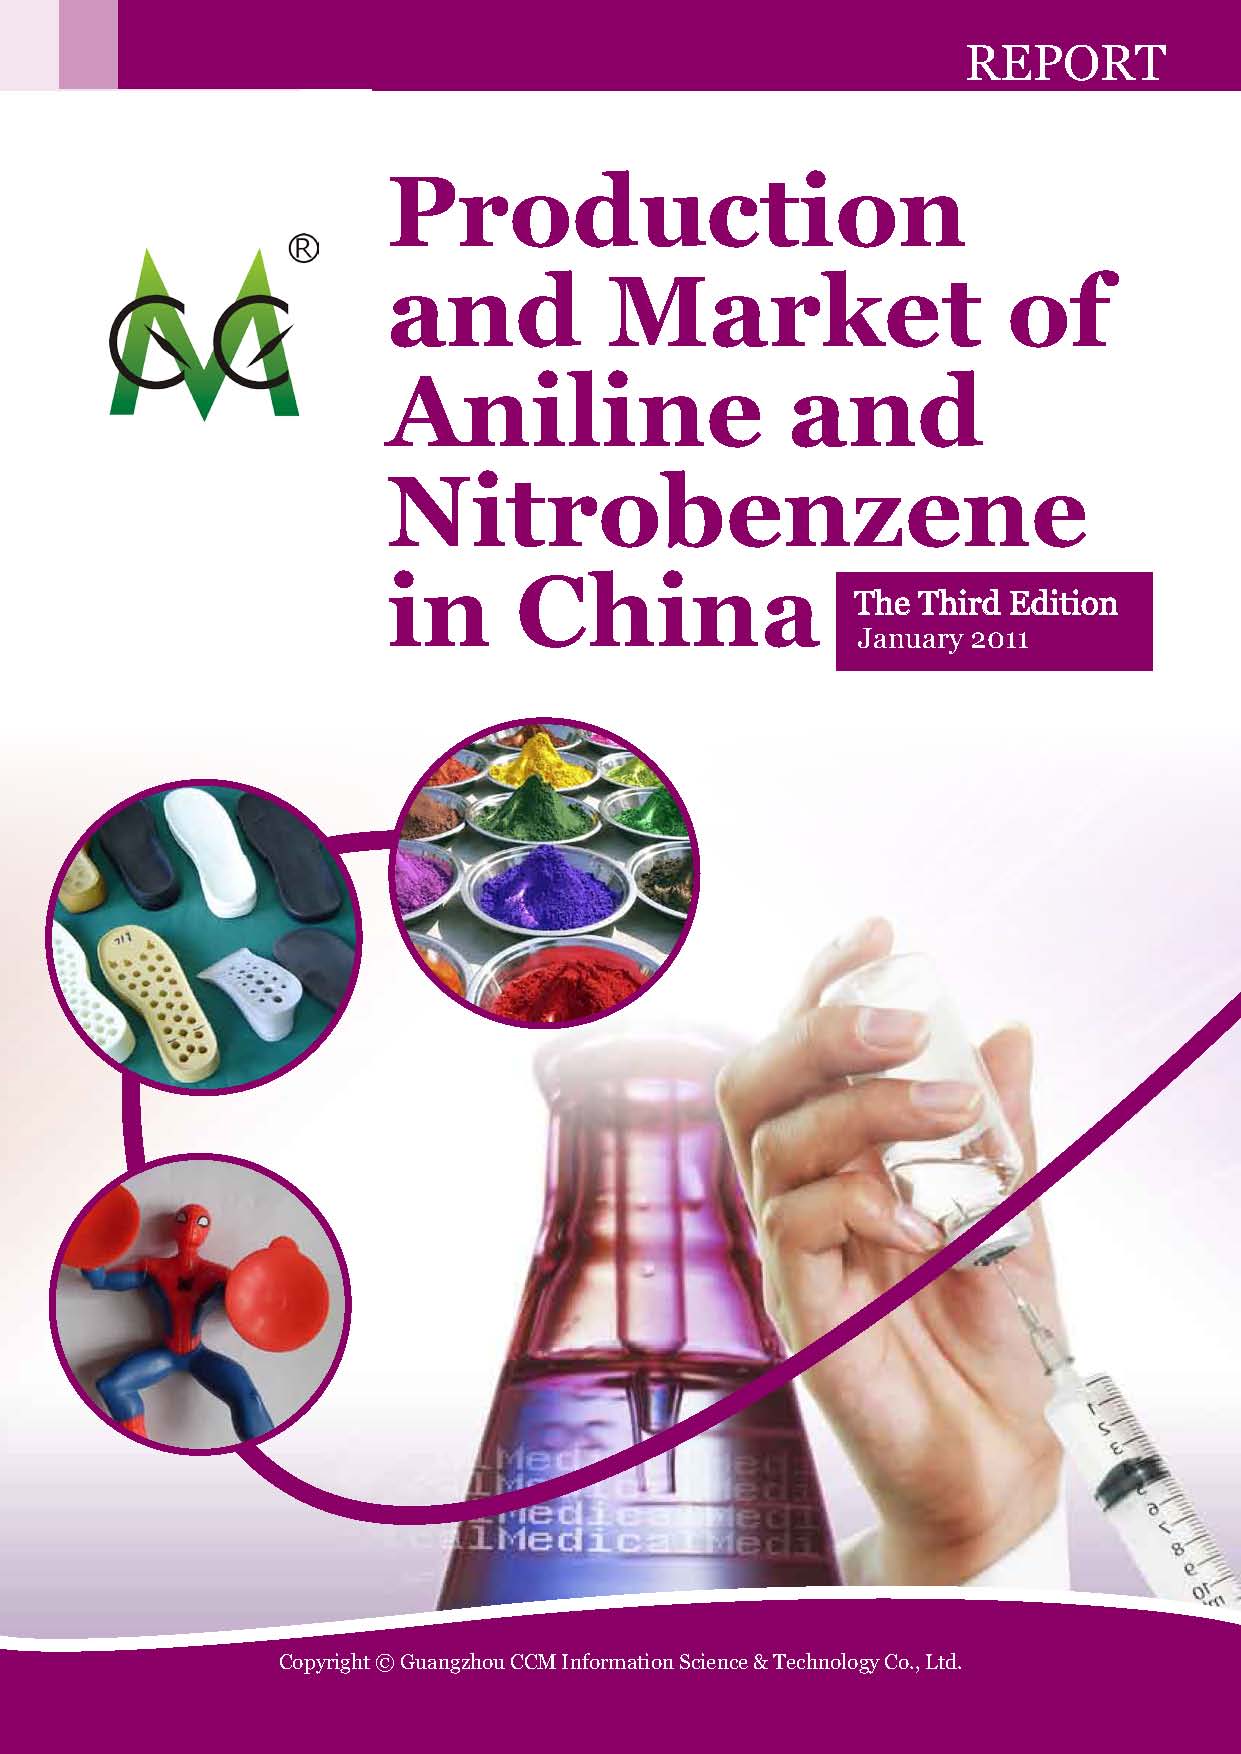 Production and Market of Aniline and Nitrobenzene in China